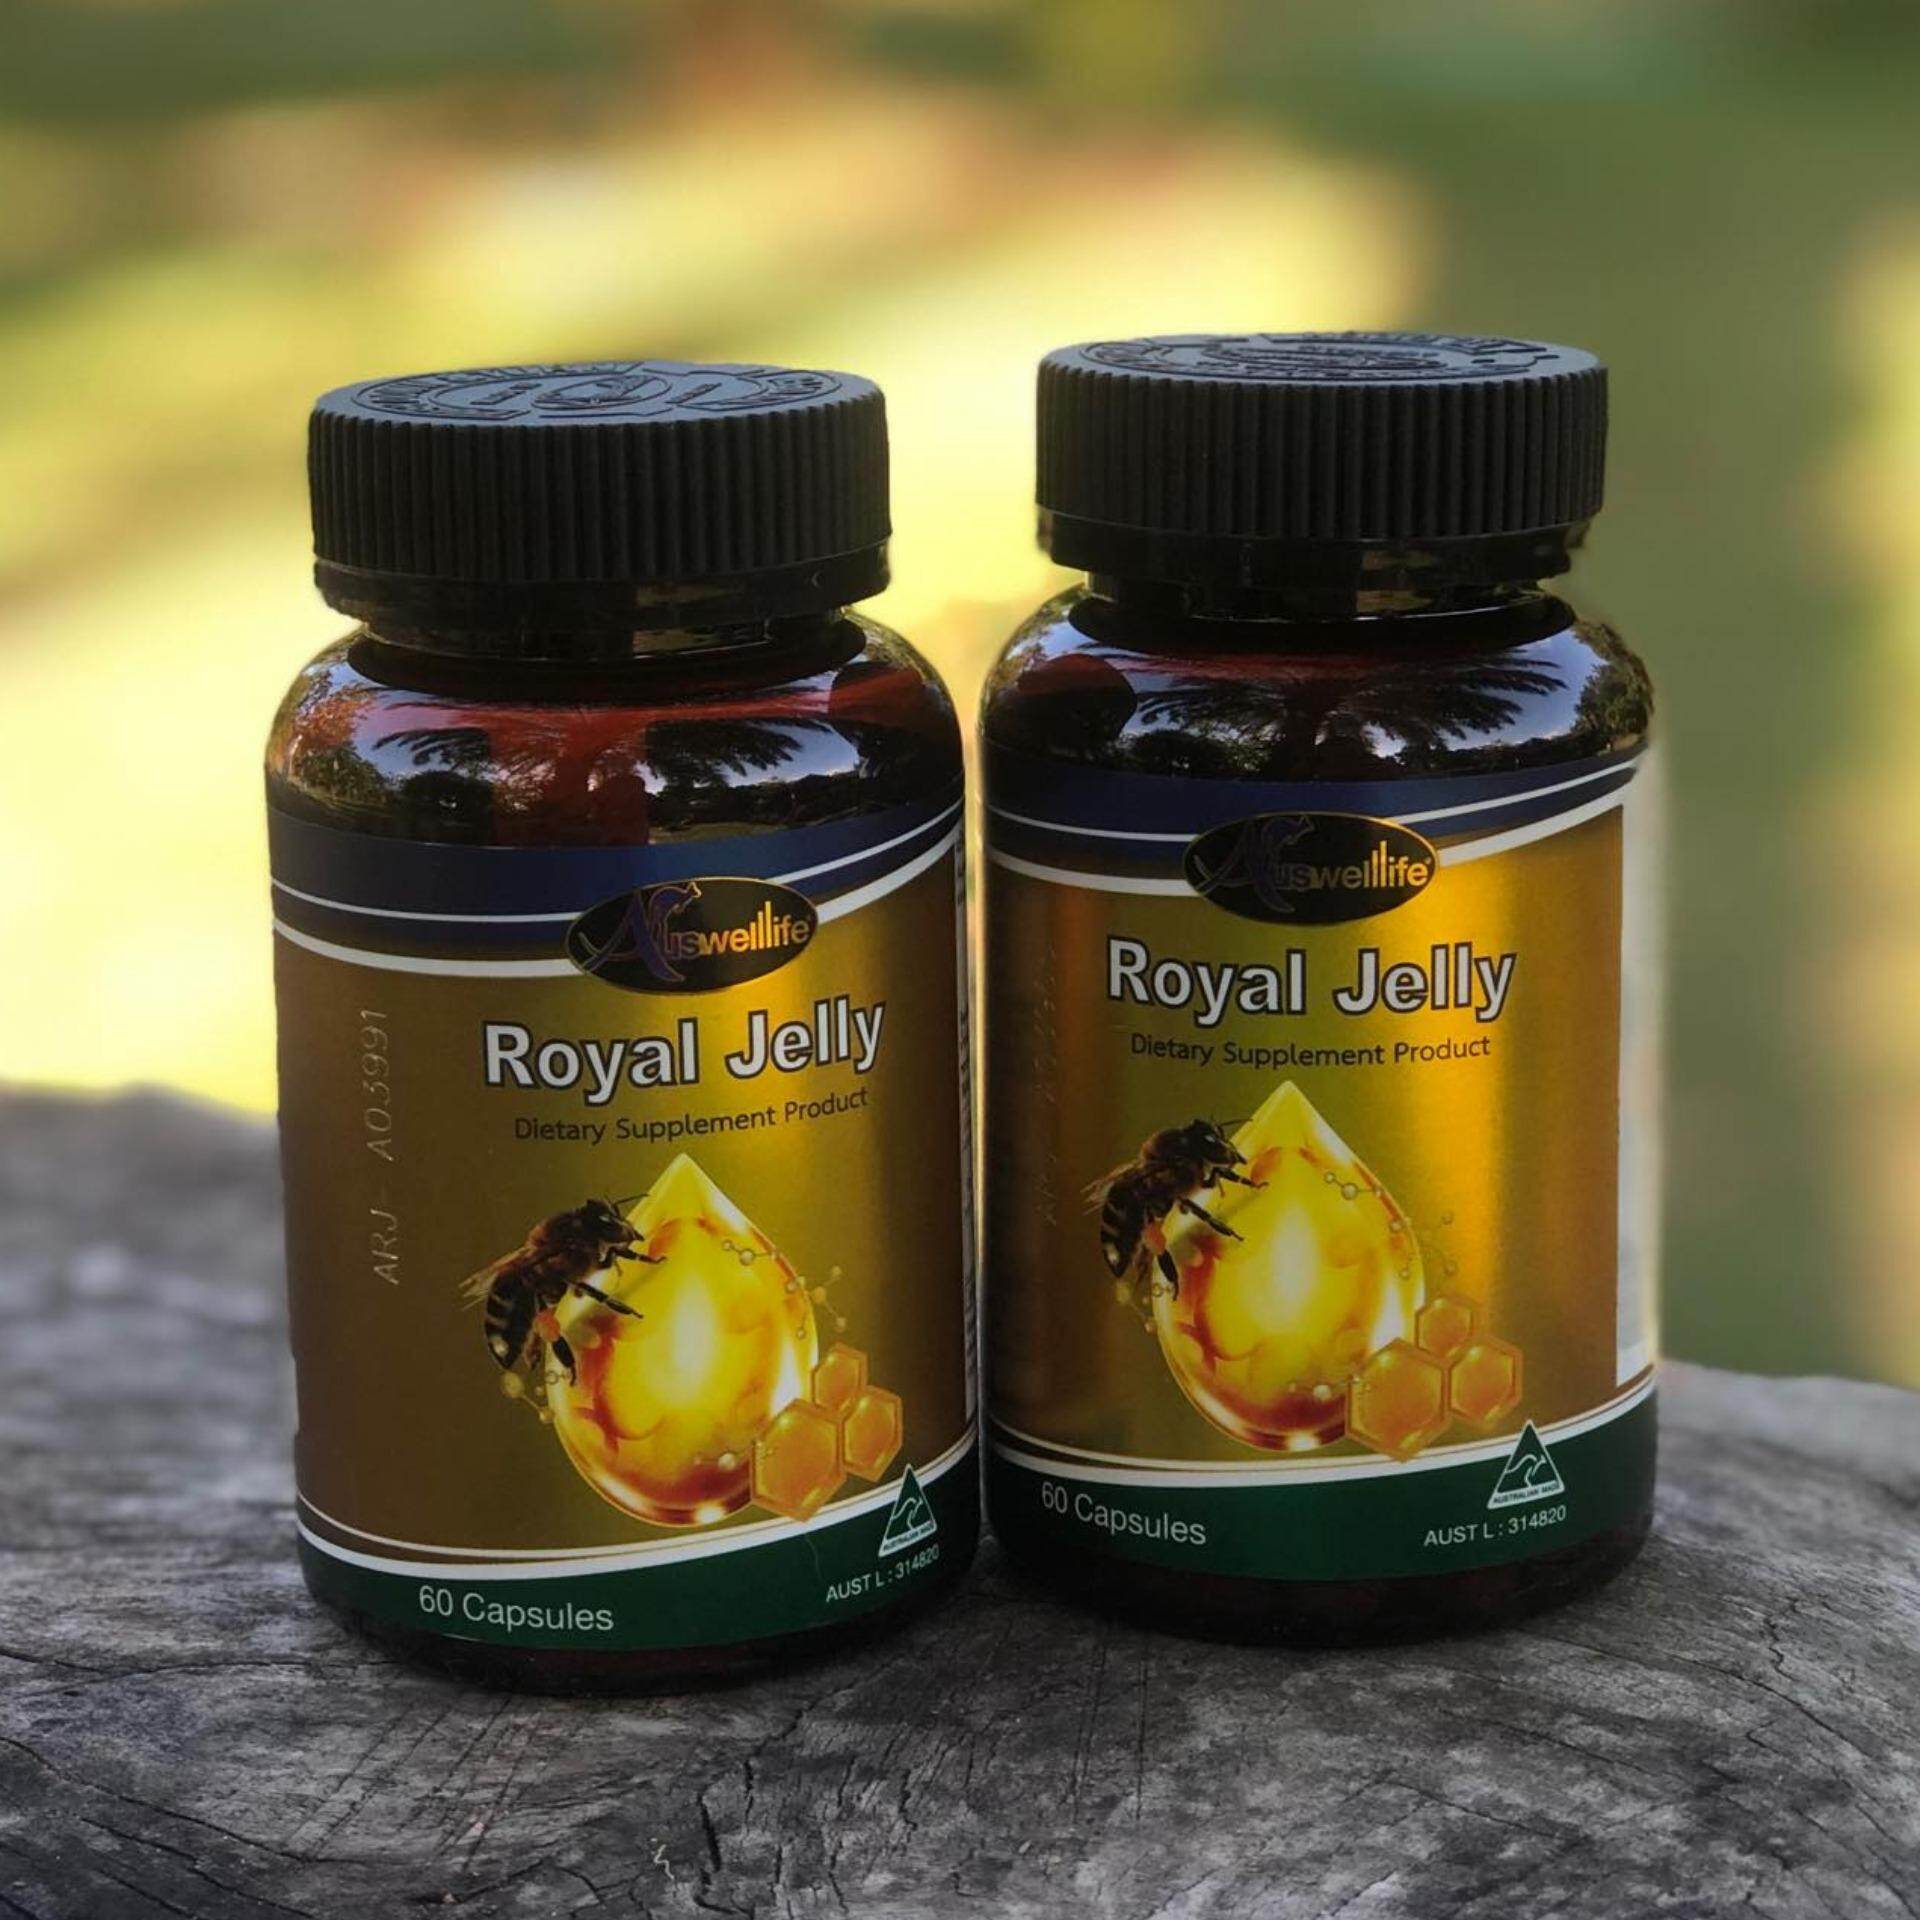 Auswelllife Royal Jelly นมผึ้งเกรดพรีเมี่ยม 100% 2180.mg บำรุงประสาทและสมอง ต้านความเครียด นอนไม่หลับ (2 กระปุก 120 แคปซูล)